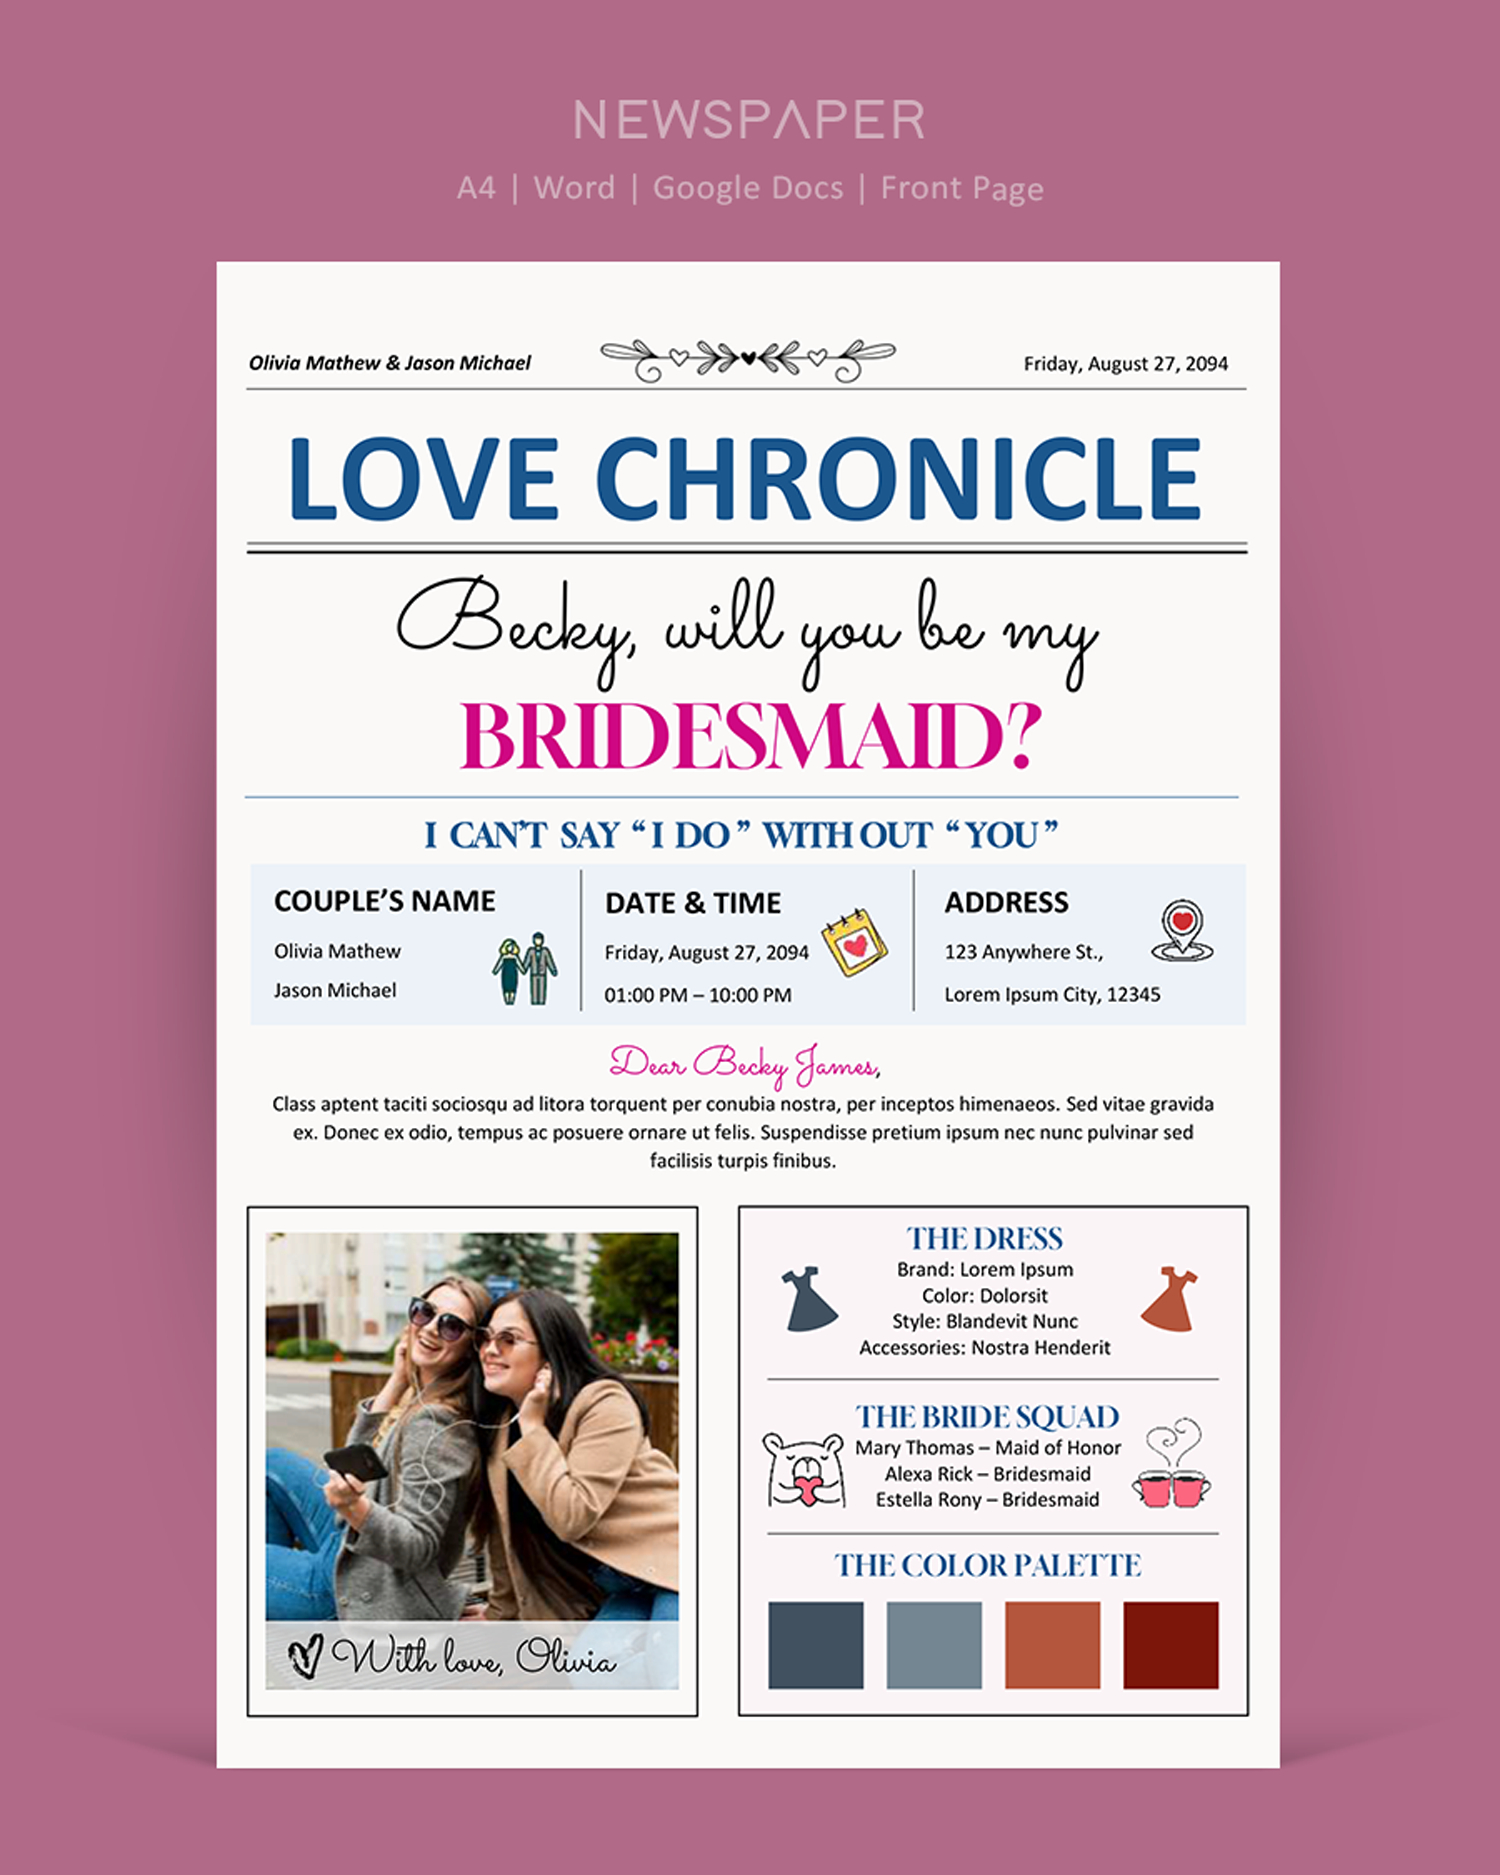 Bridesmaid A4 Newspaper Template - Word, Google Docs